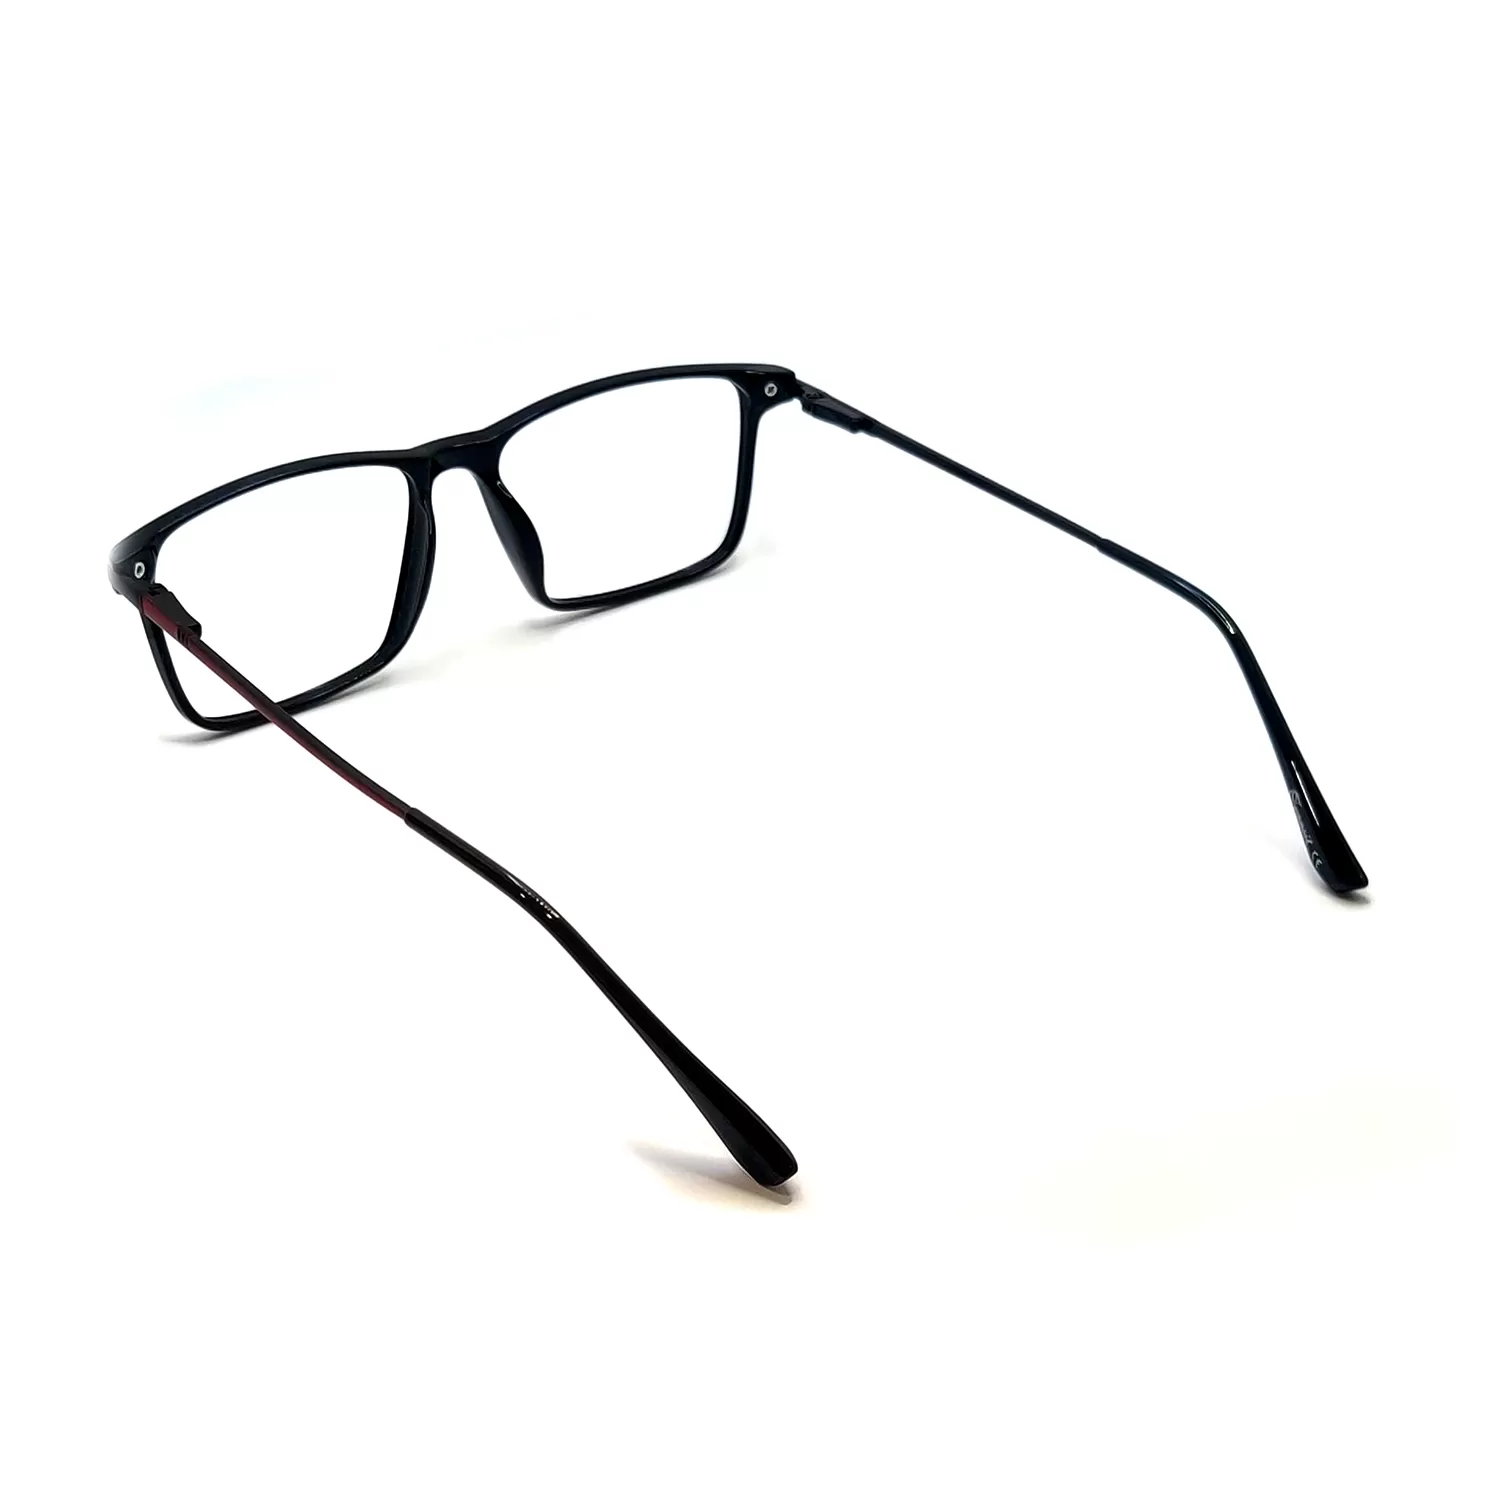 Black Rectangular eyeglasses online at chashmah.com